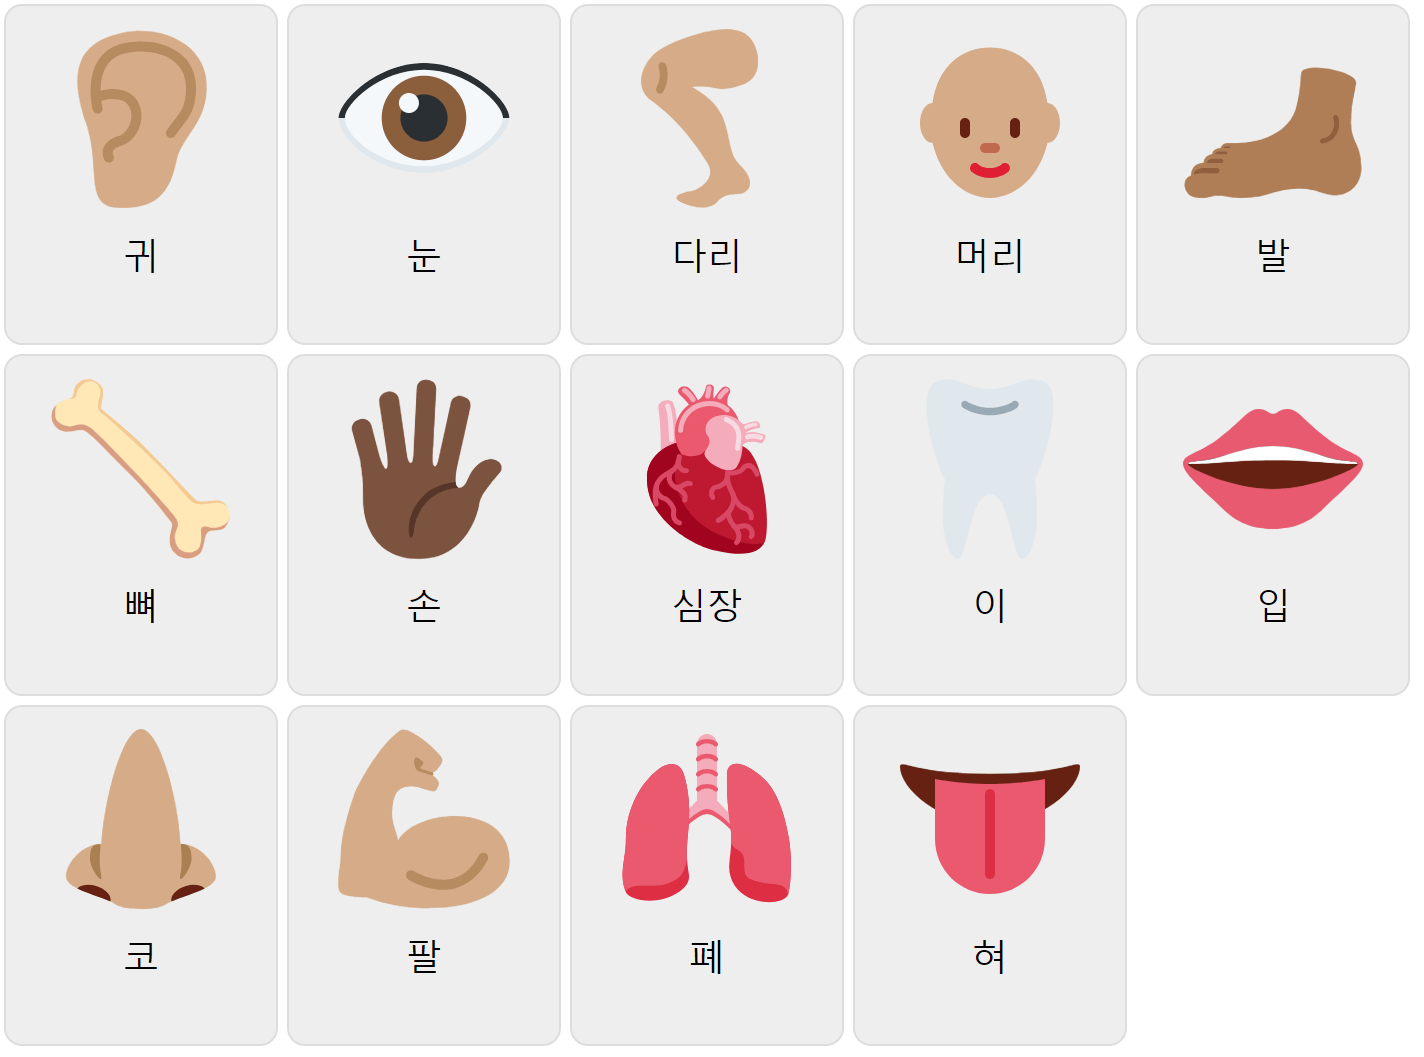 Body Parts in Korean